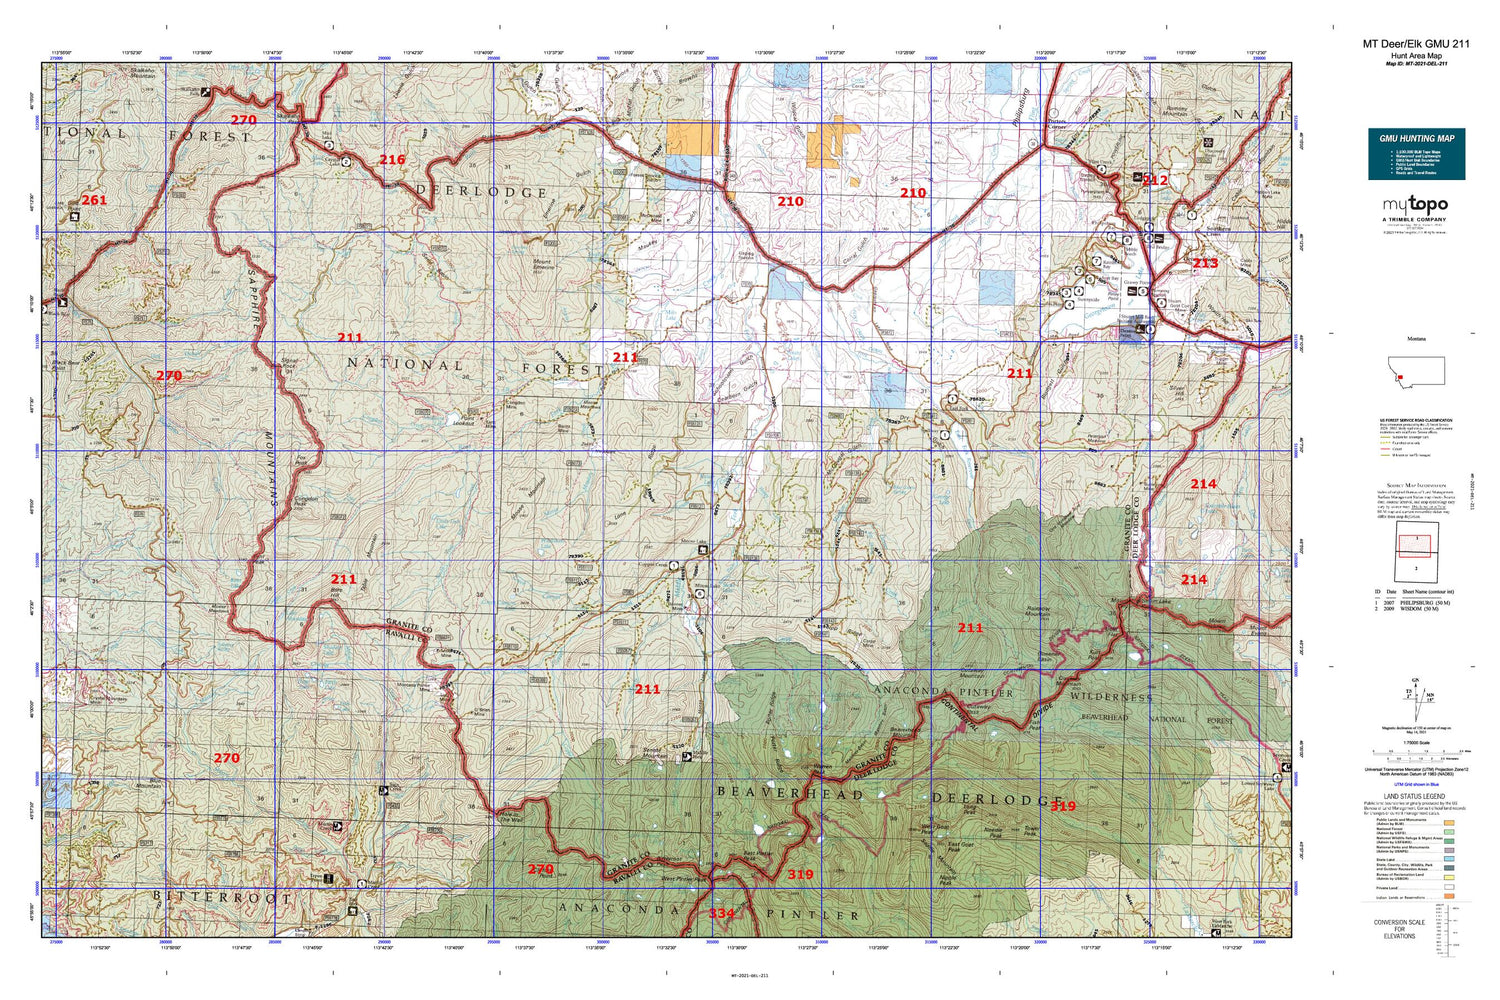 Montana Deer/Elk GMU 211 Map Image